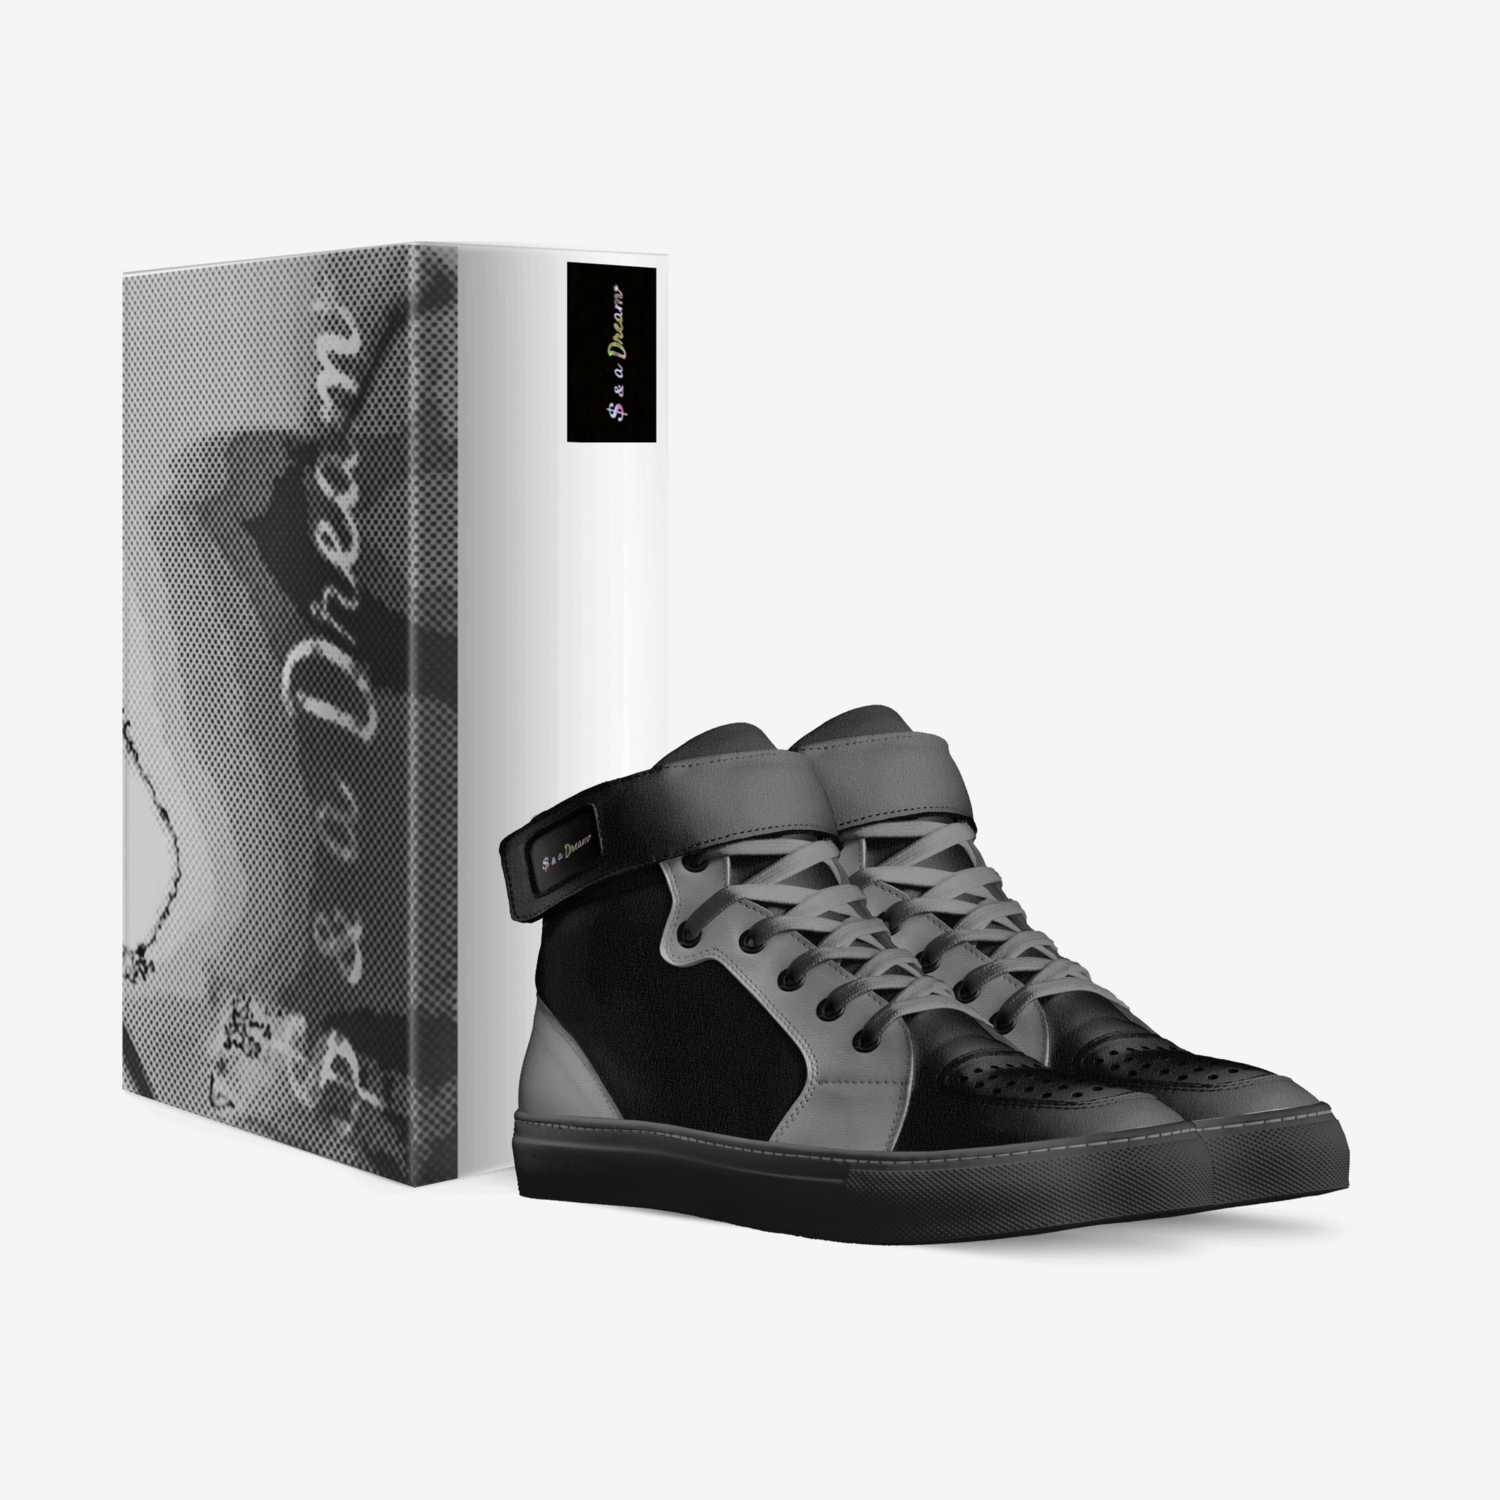 .kollz custom made in Italy shoes by Anonimo Landro | Box view